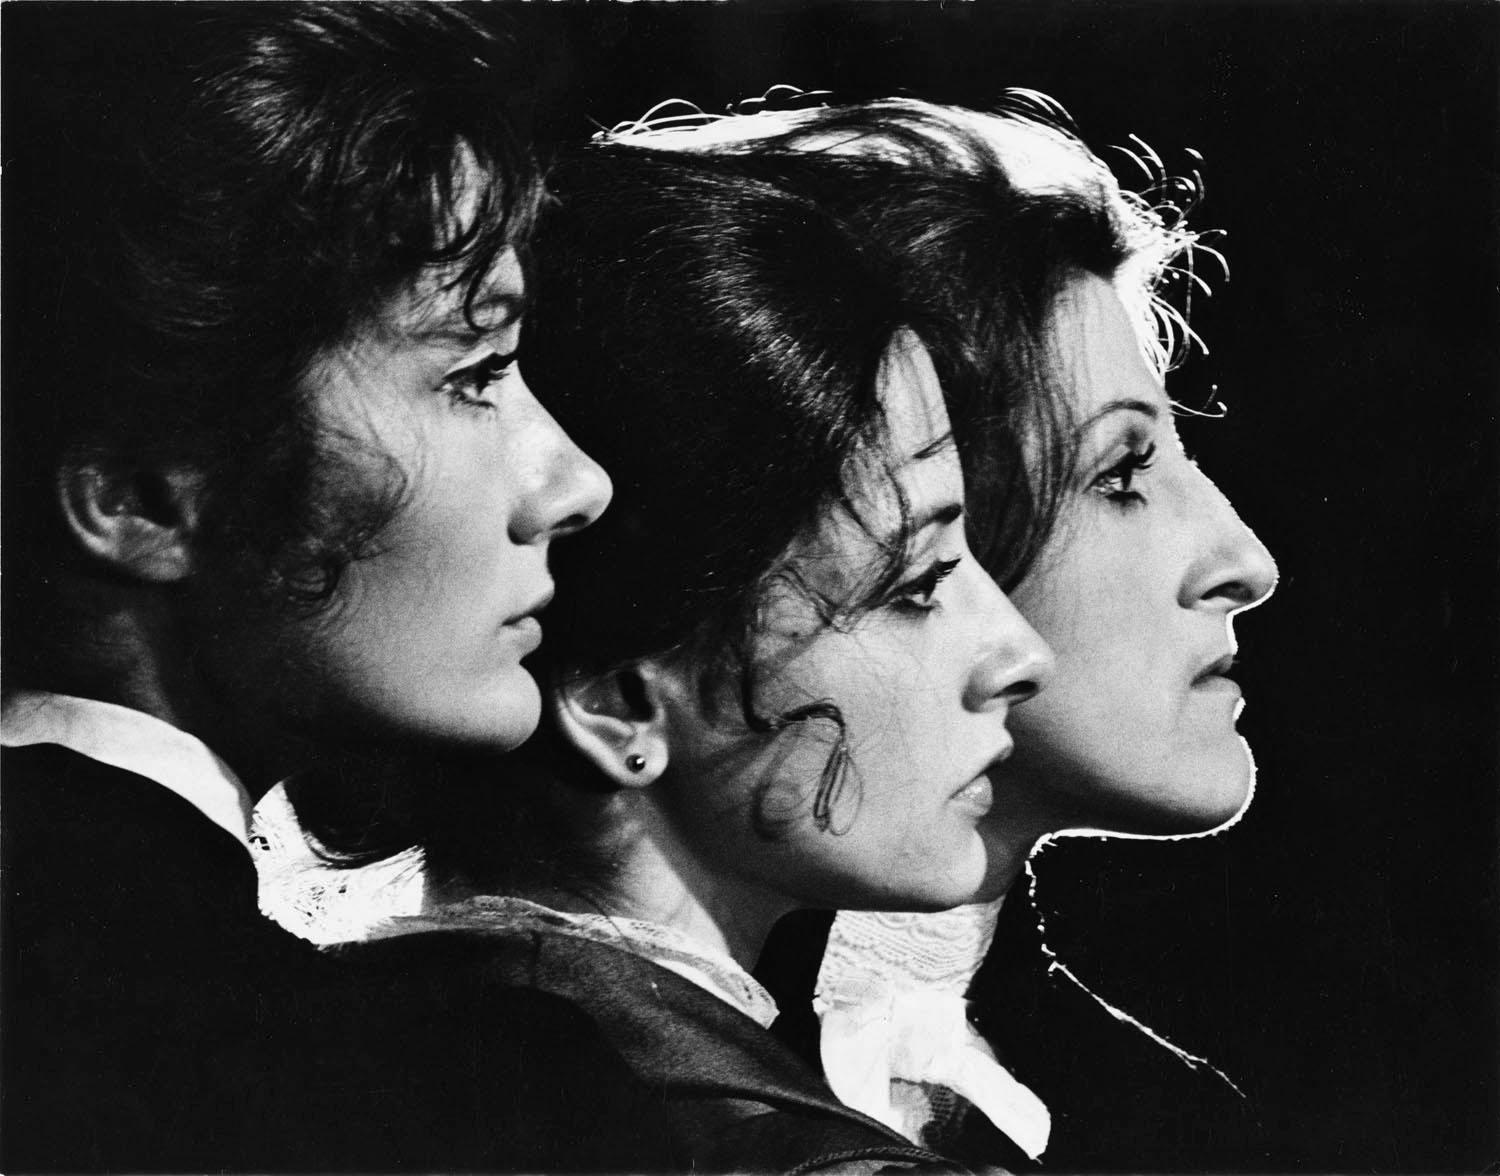 Jack Mitchell Black and White Photograph – Pat Patti LuPone, Mary-Joan Negro, Mary Lou Rosato in „Drei Schwestern“, signiert von Jack